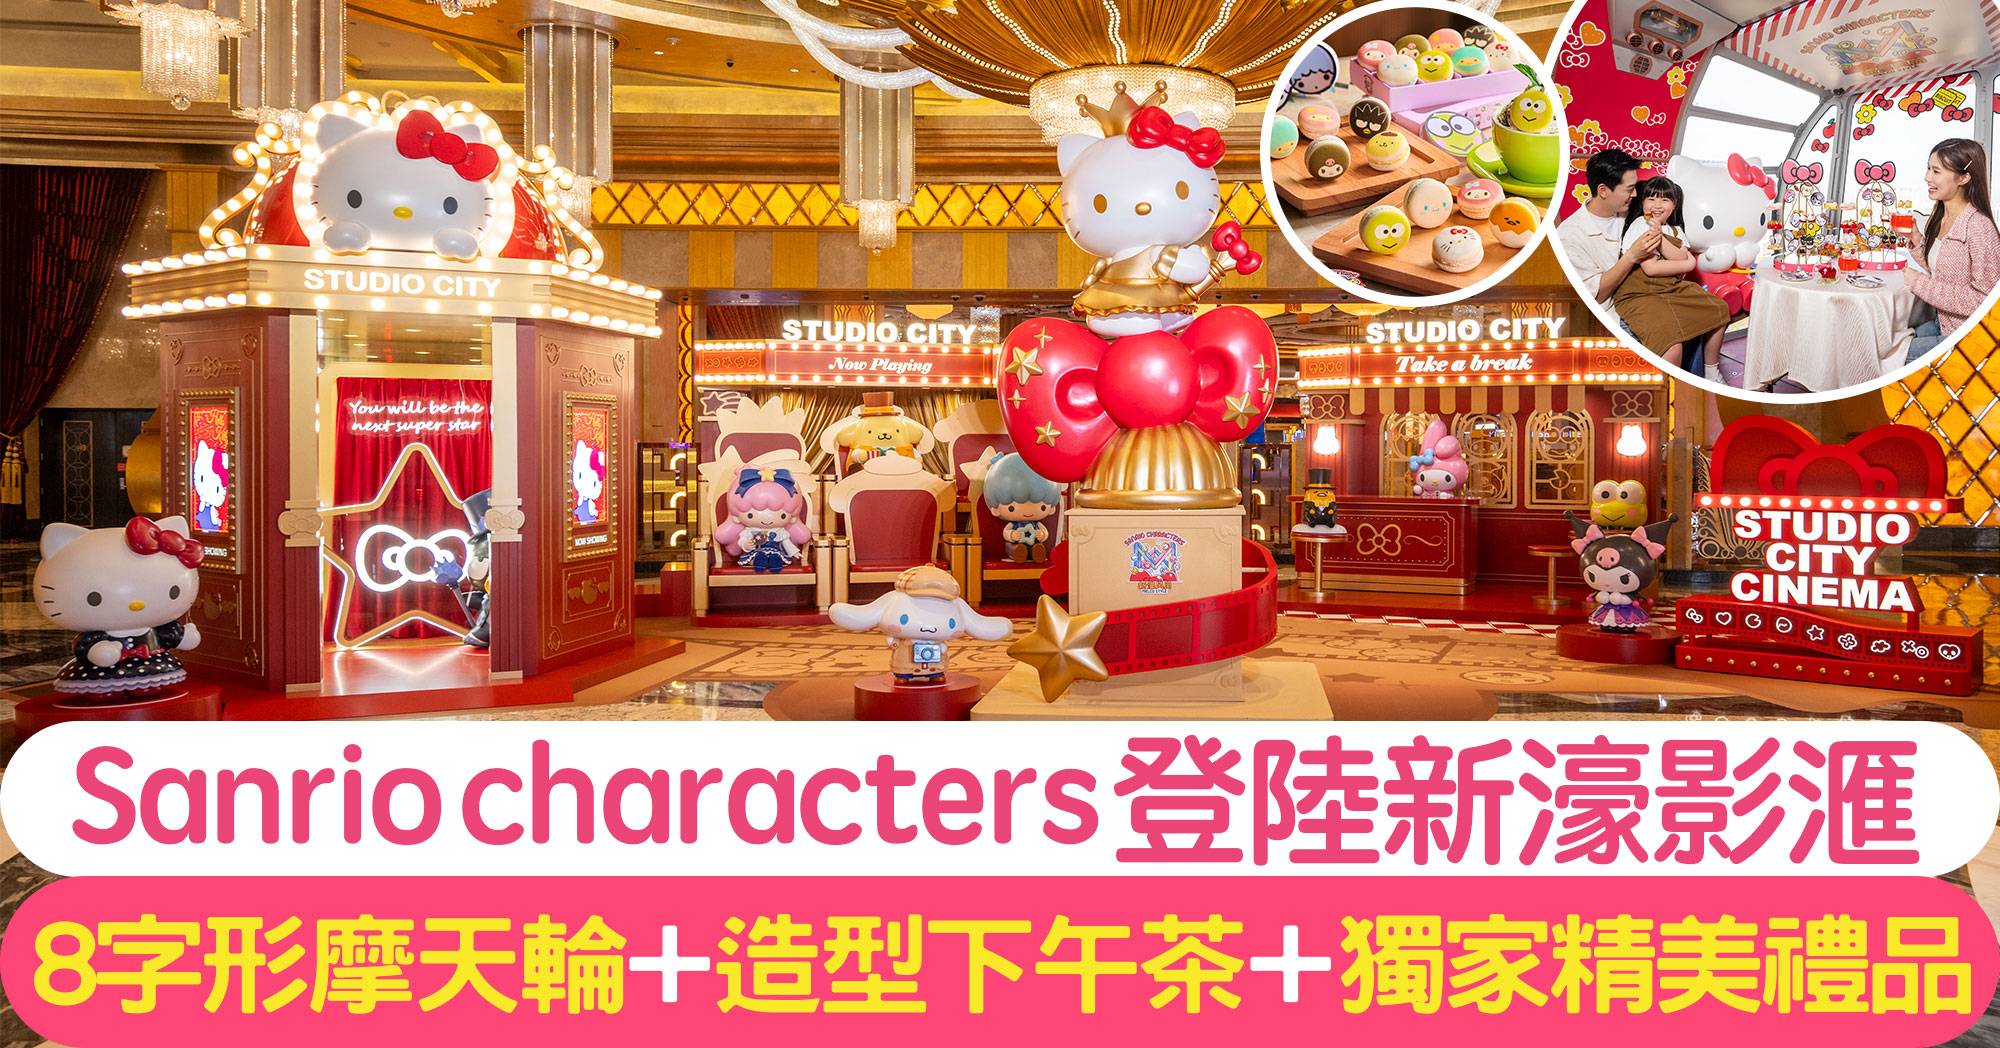 Sanrio characters登陸澳門新濠影滙｜5大主題活動：8字形主題摩天輪＋造型下午茶